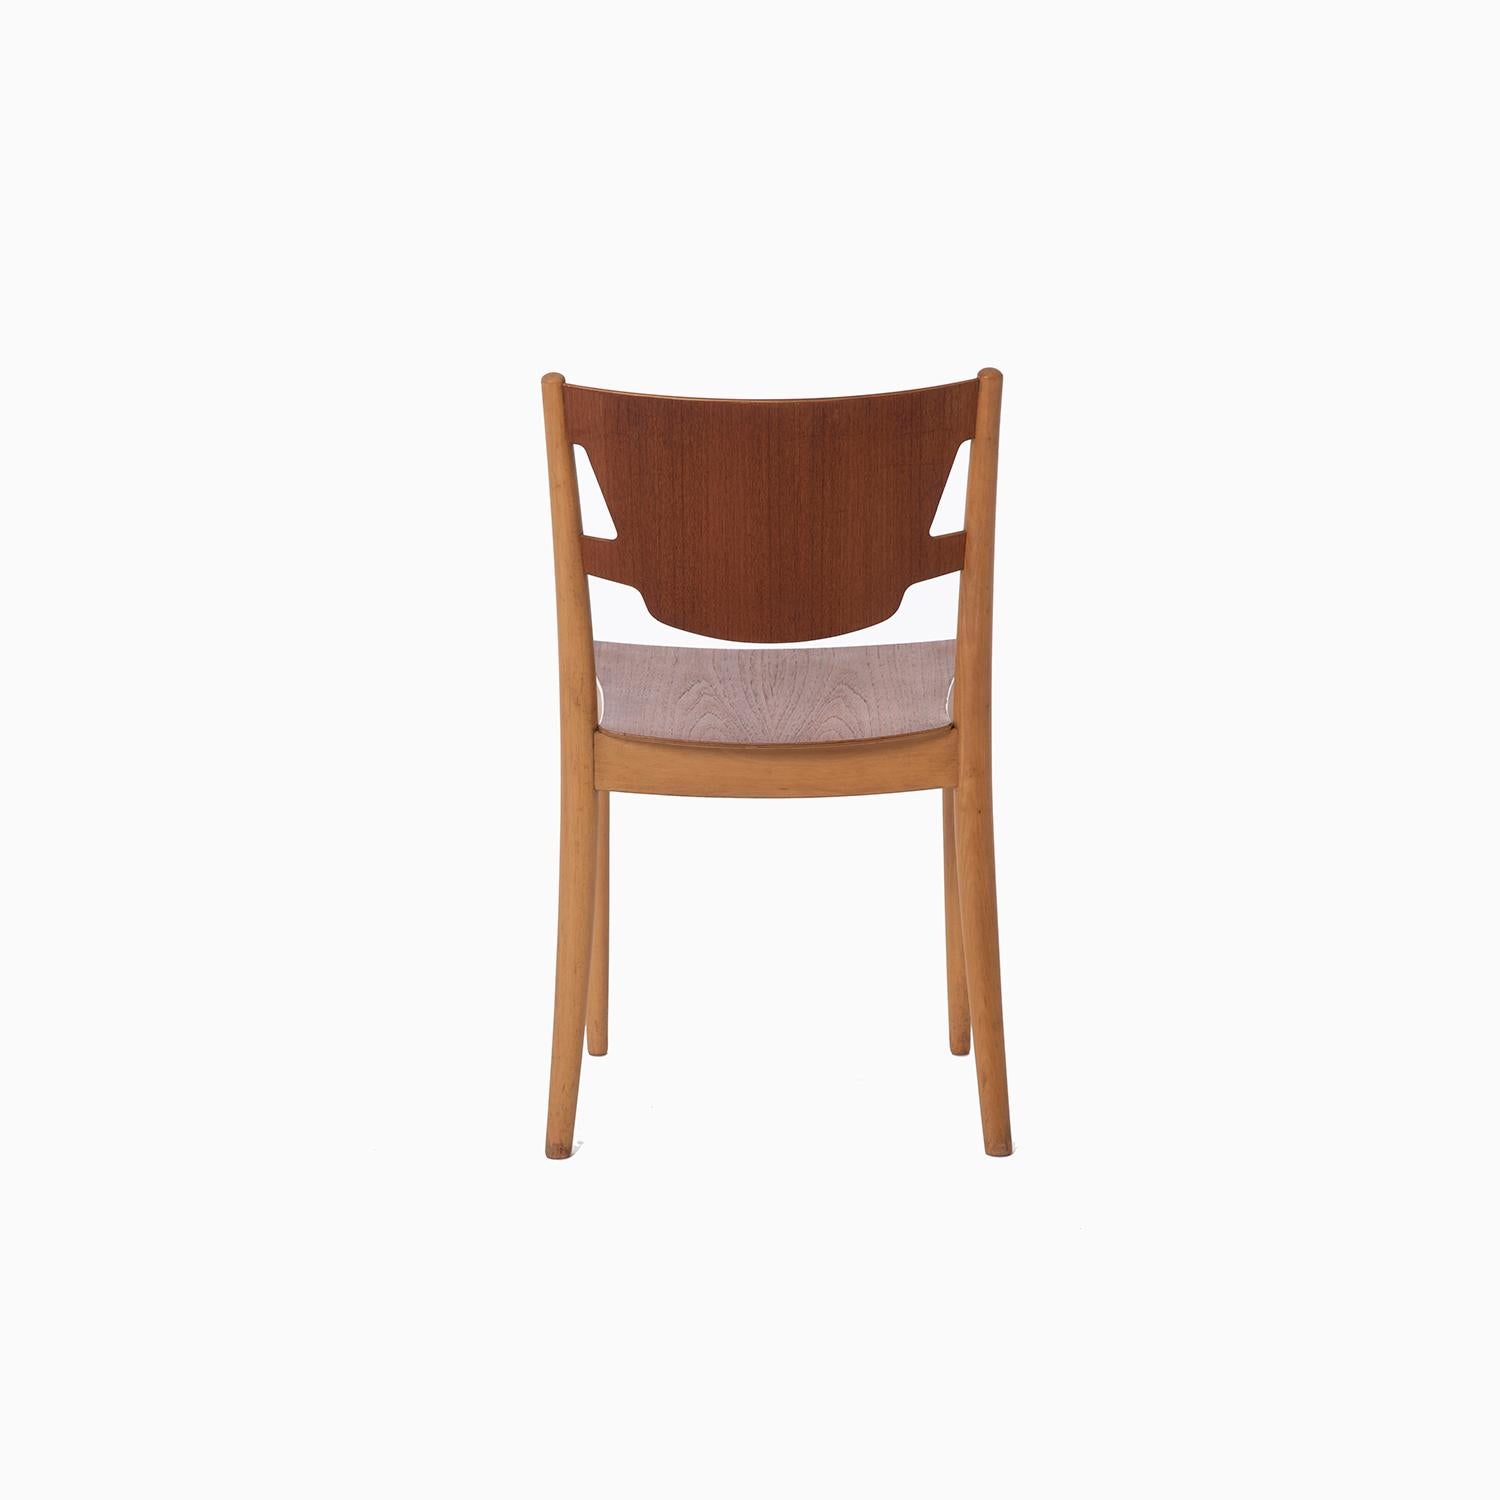 Beech Danish Modern Hvidt & Molgaard Stacking Side Chair